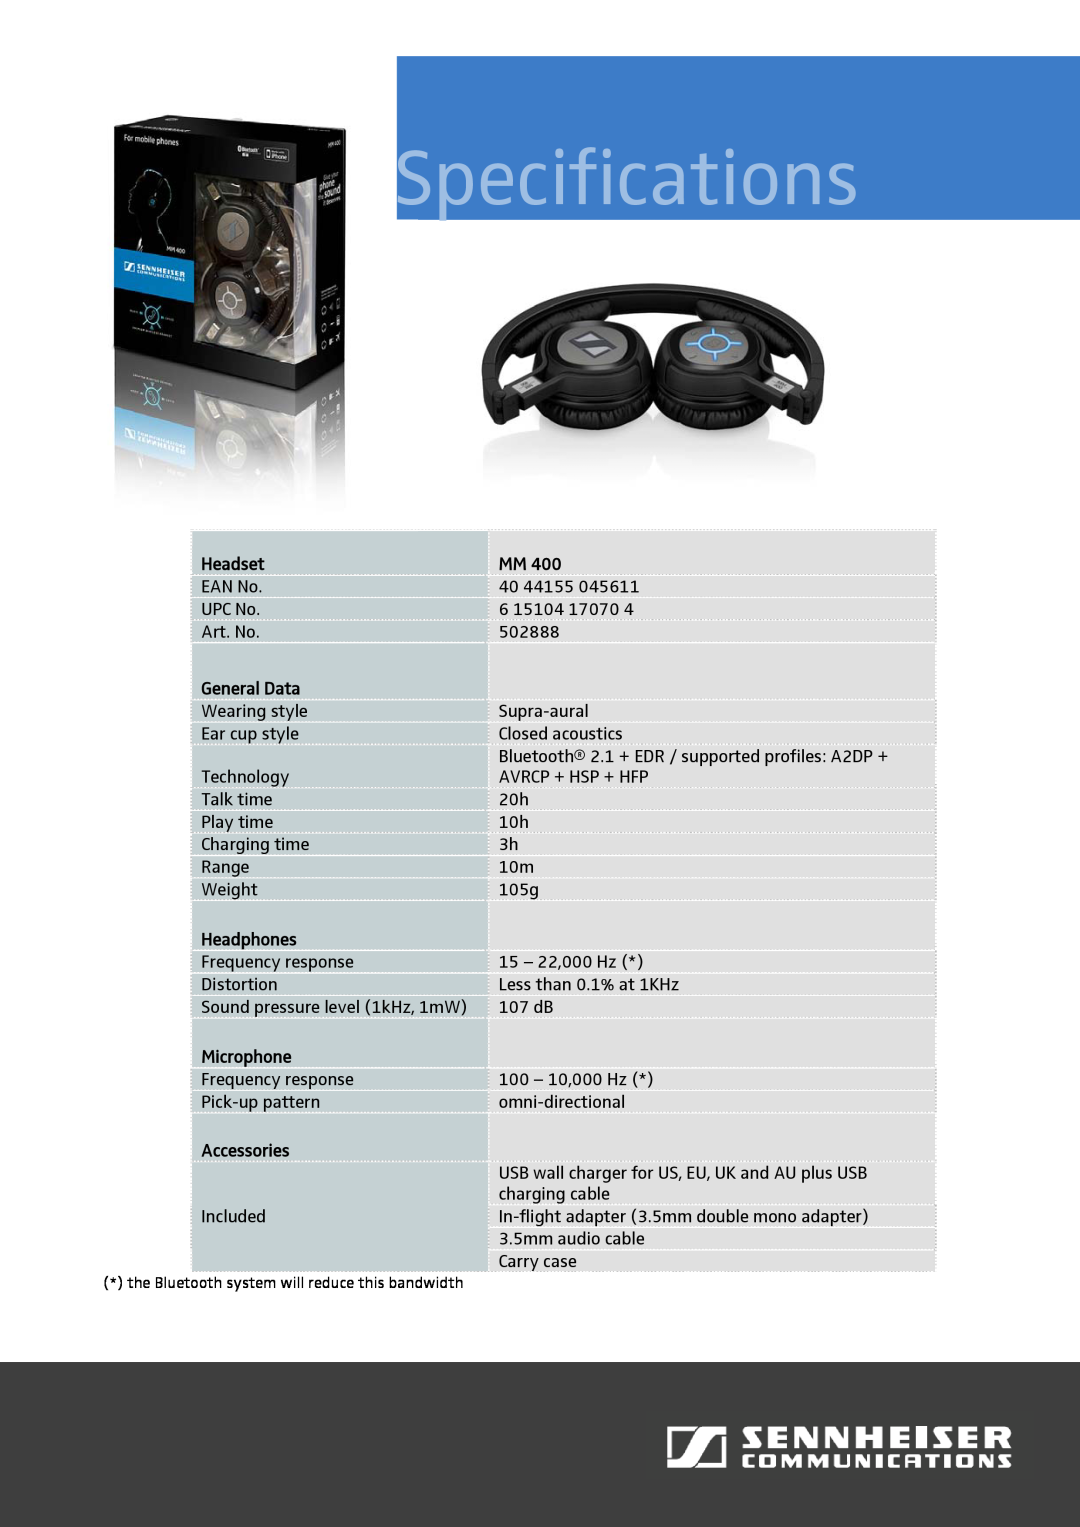 Sennheiser MM400 warranty Specifications, Headset, General Data, Headphones, Microphone, Accessories 